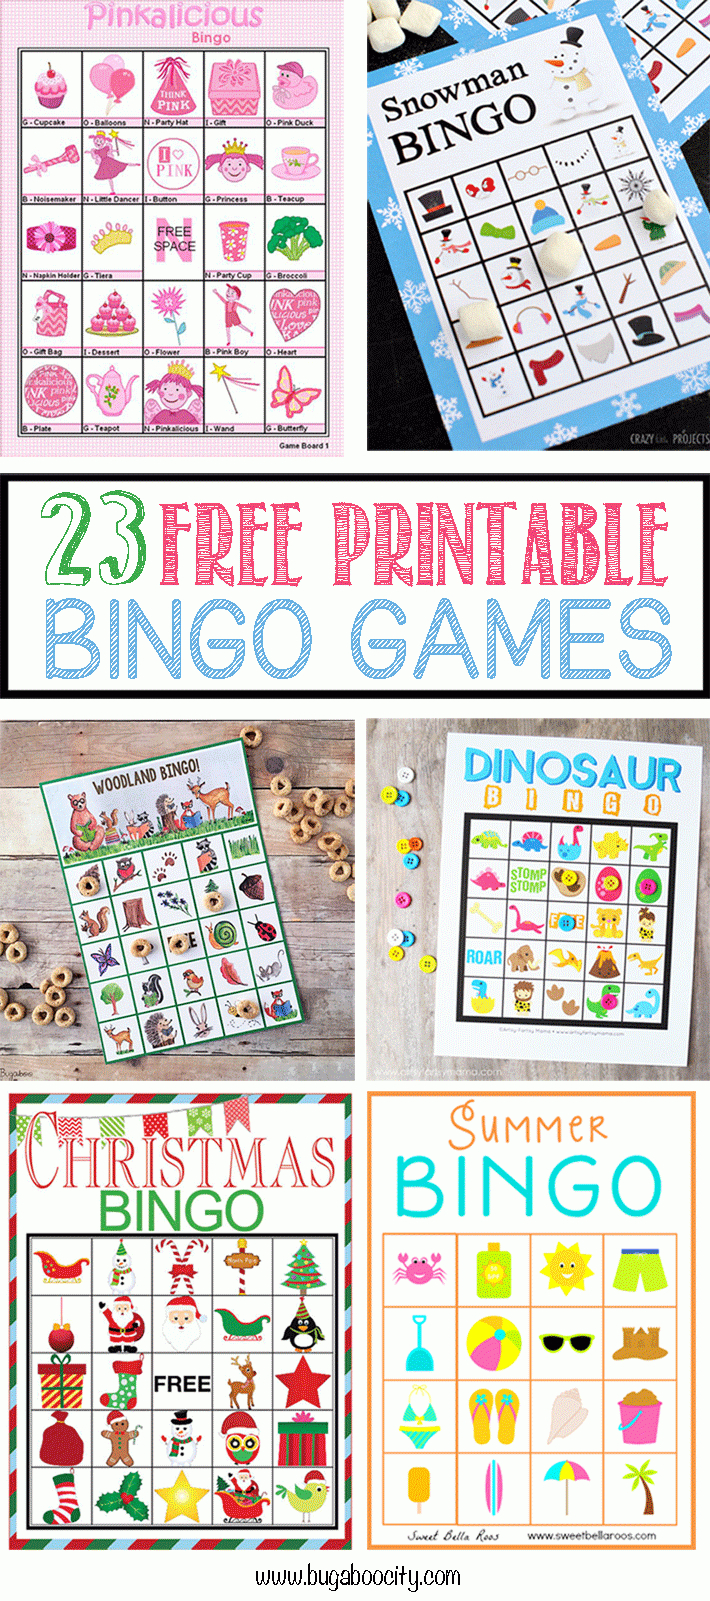 23 Free Printable Bingo Games | Bugaboocity Blog | Bingo, Bingo - Free Printable Bingo Games